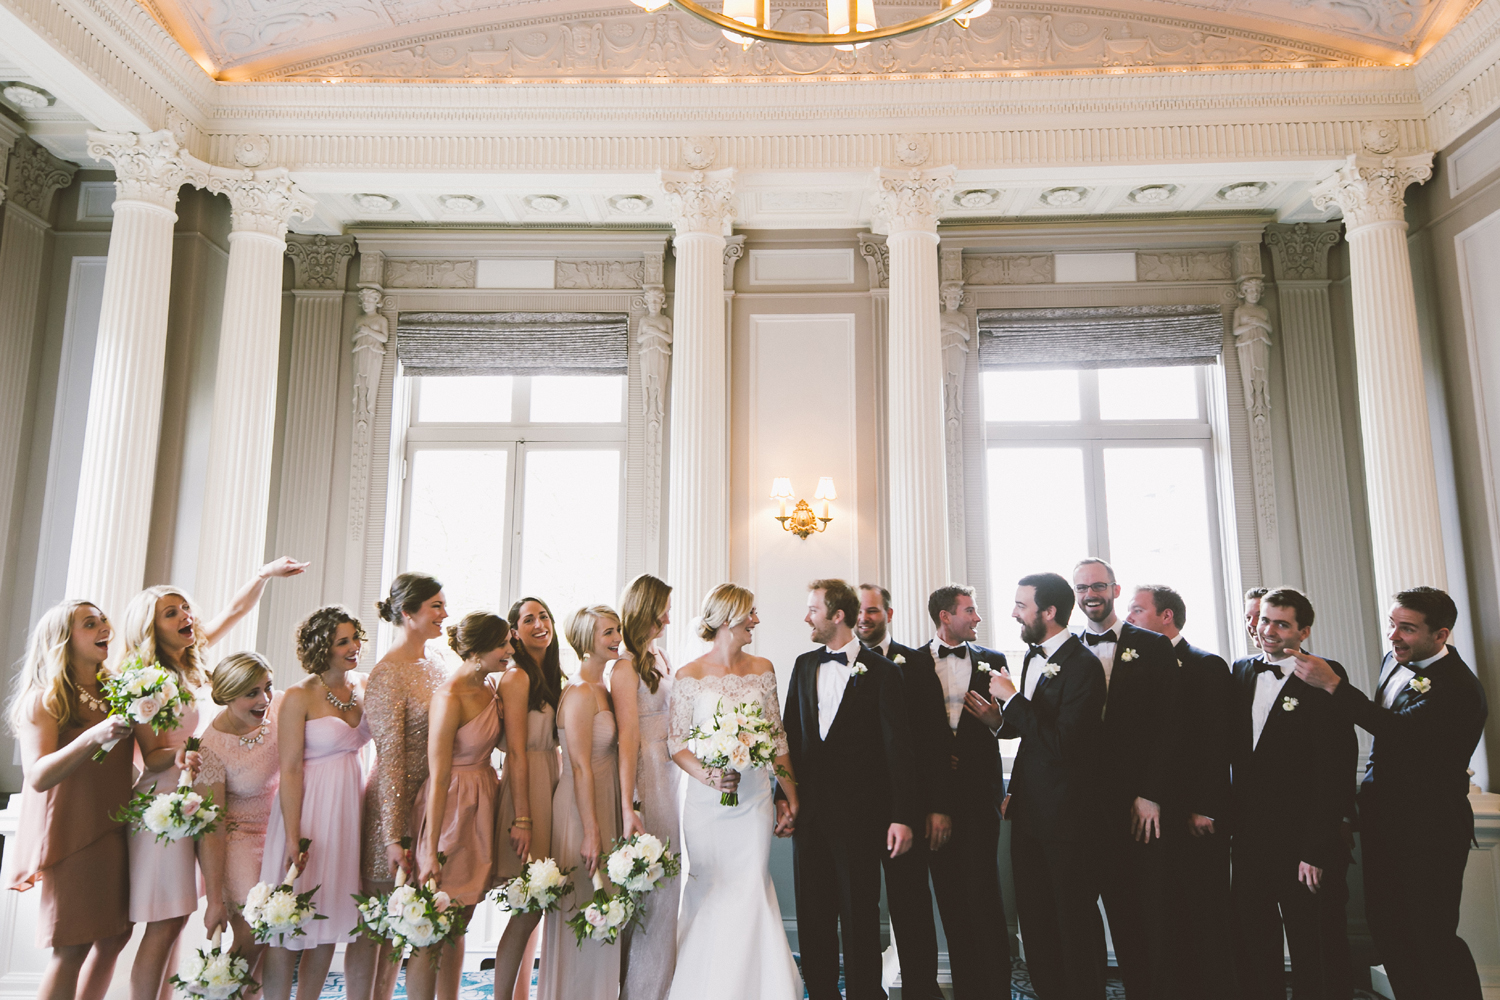 Bridalbliss.com | Portland Wedding | Oregon Event Planning and Design | Christy Cassano Meyer Photography 